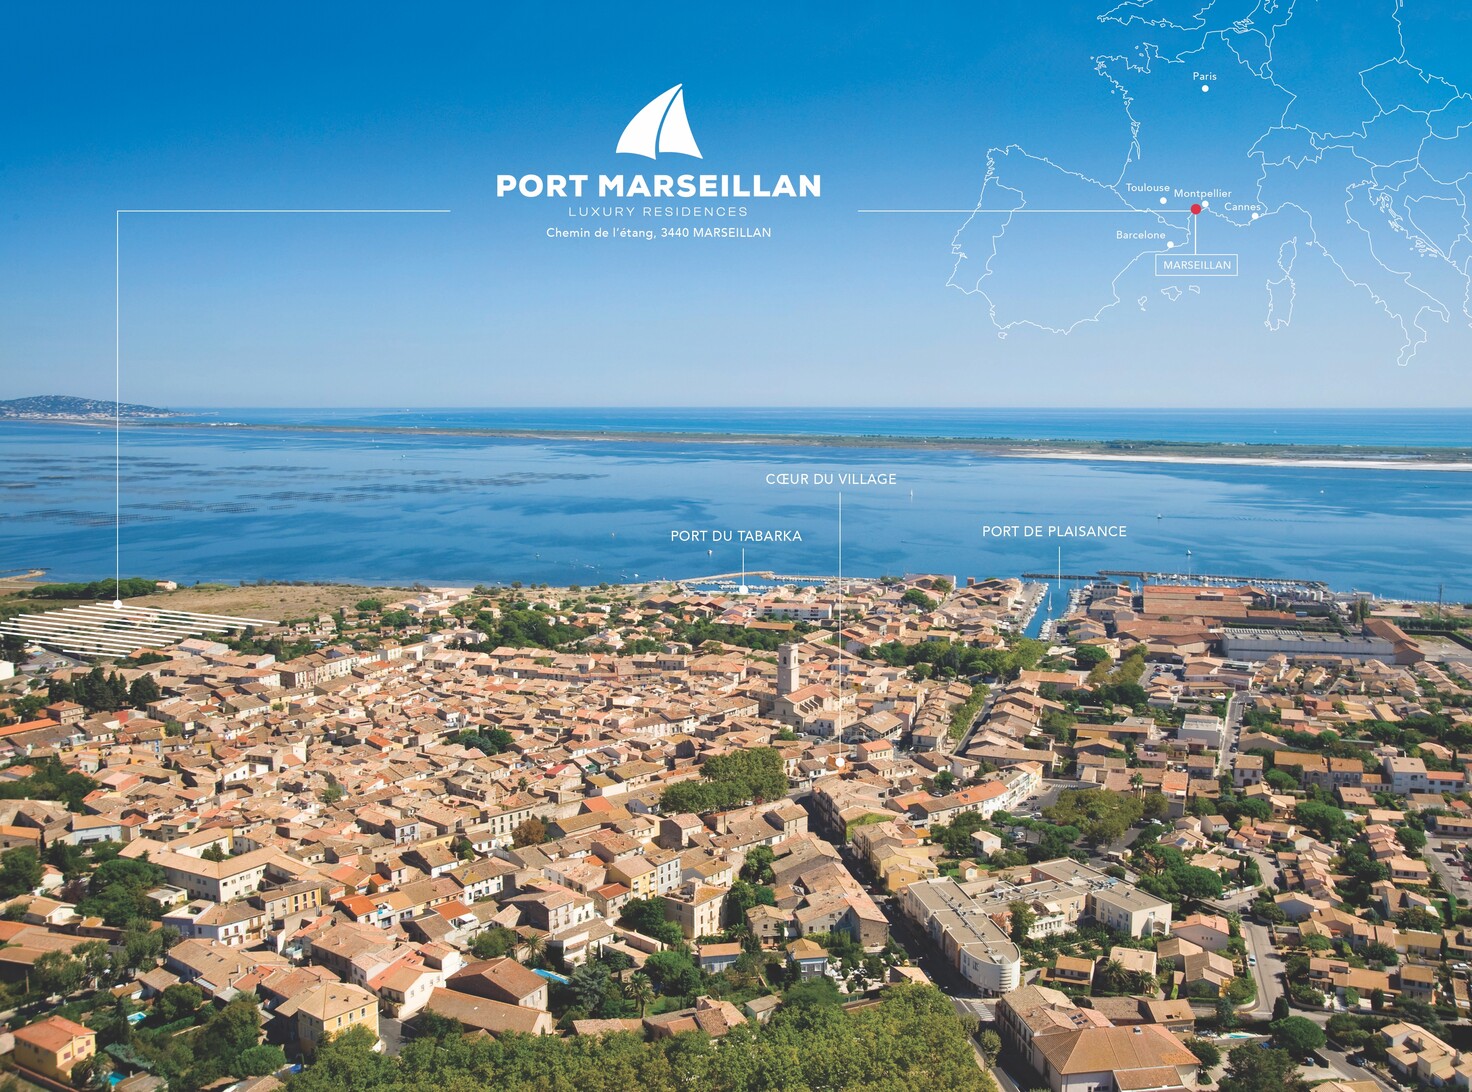 View Port Marseillan